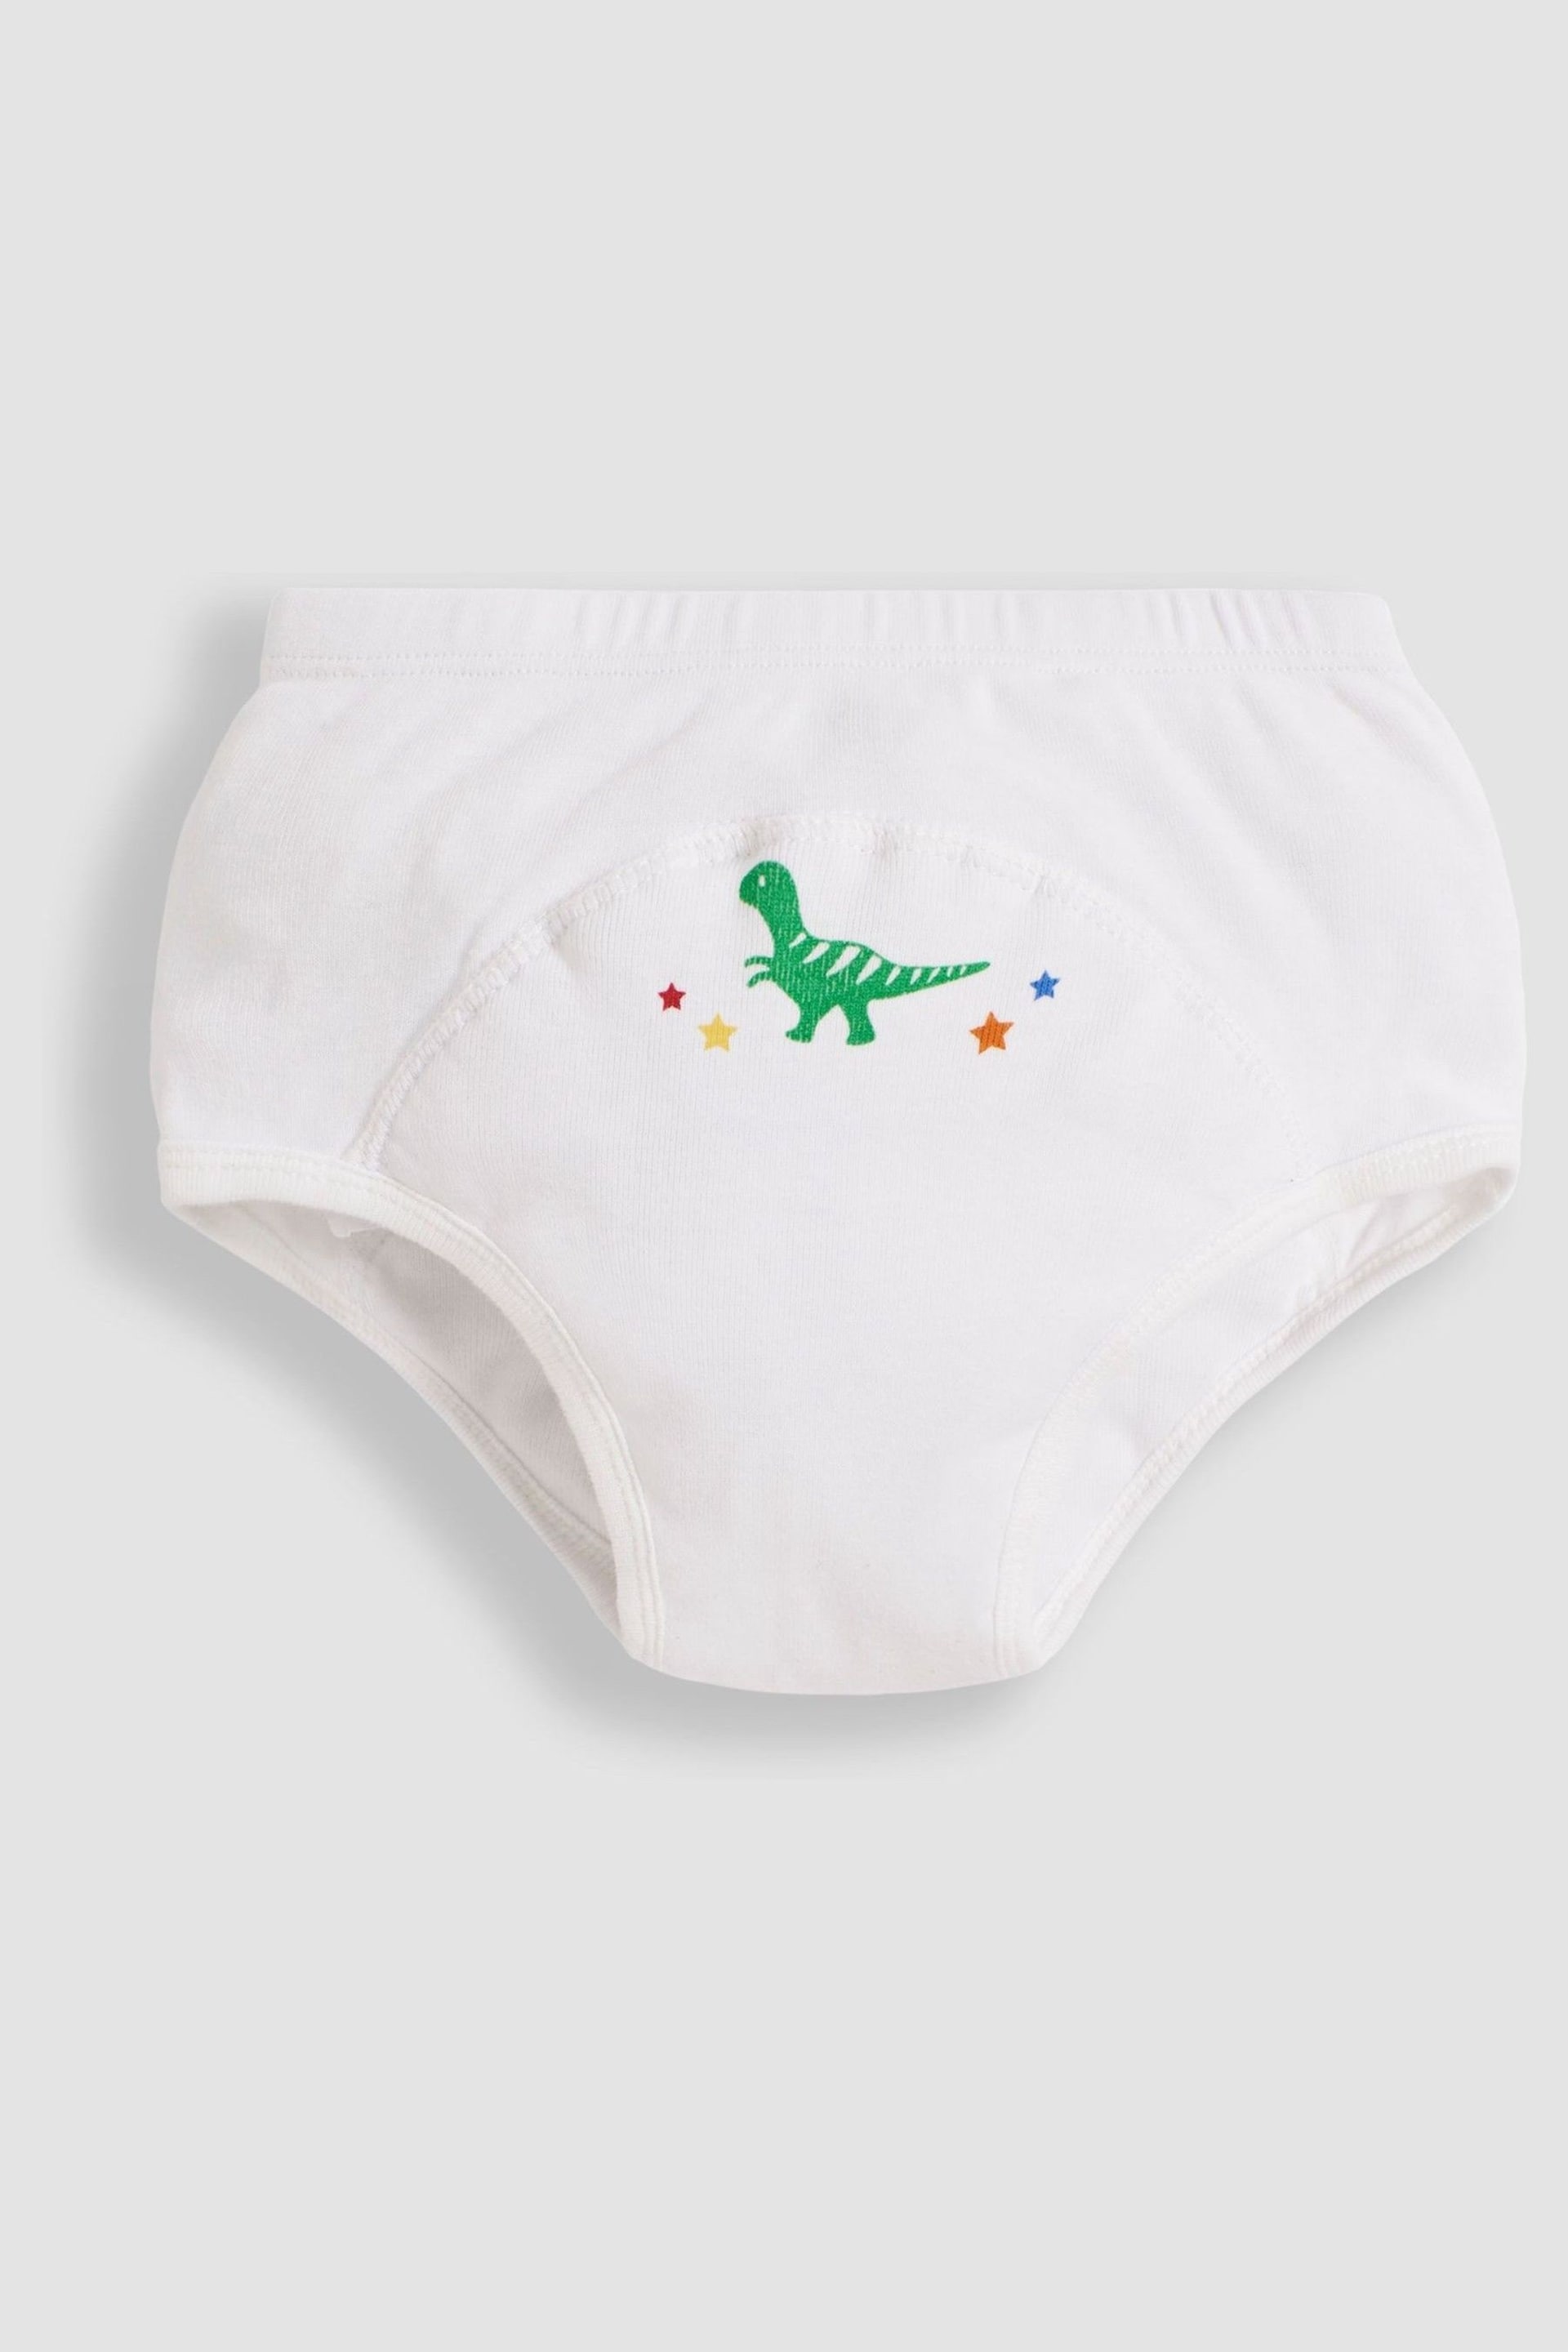 JoJo Maman Bébé Dinosaur 3-Pack Training Pants - Image 2 of 4